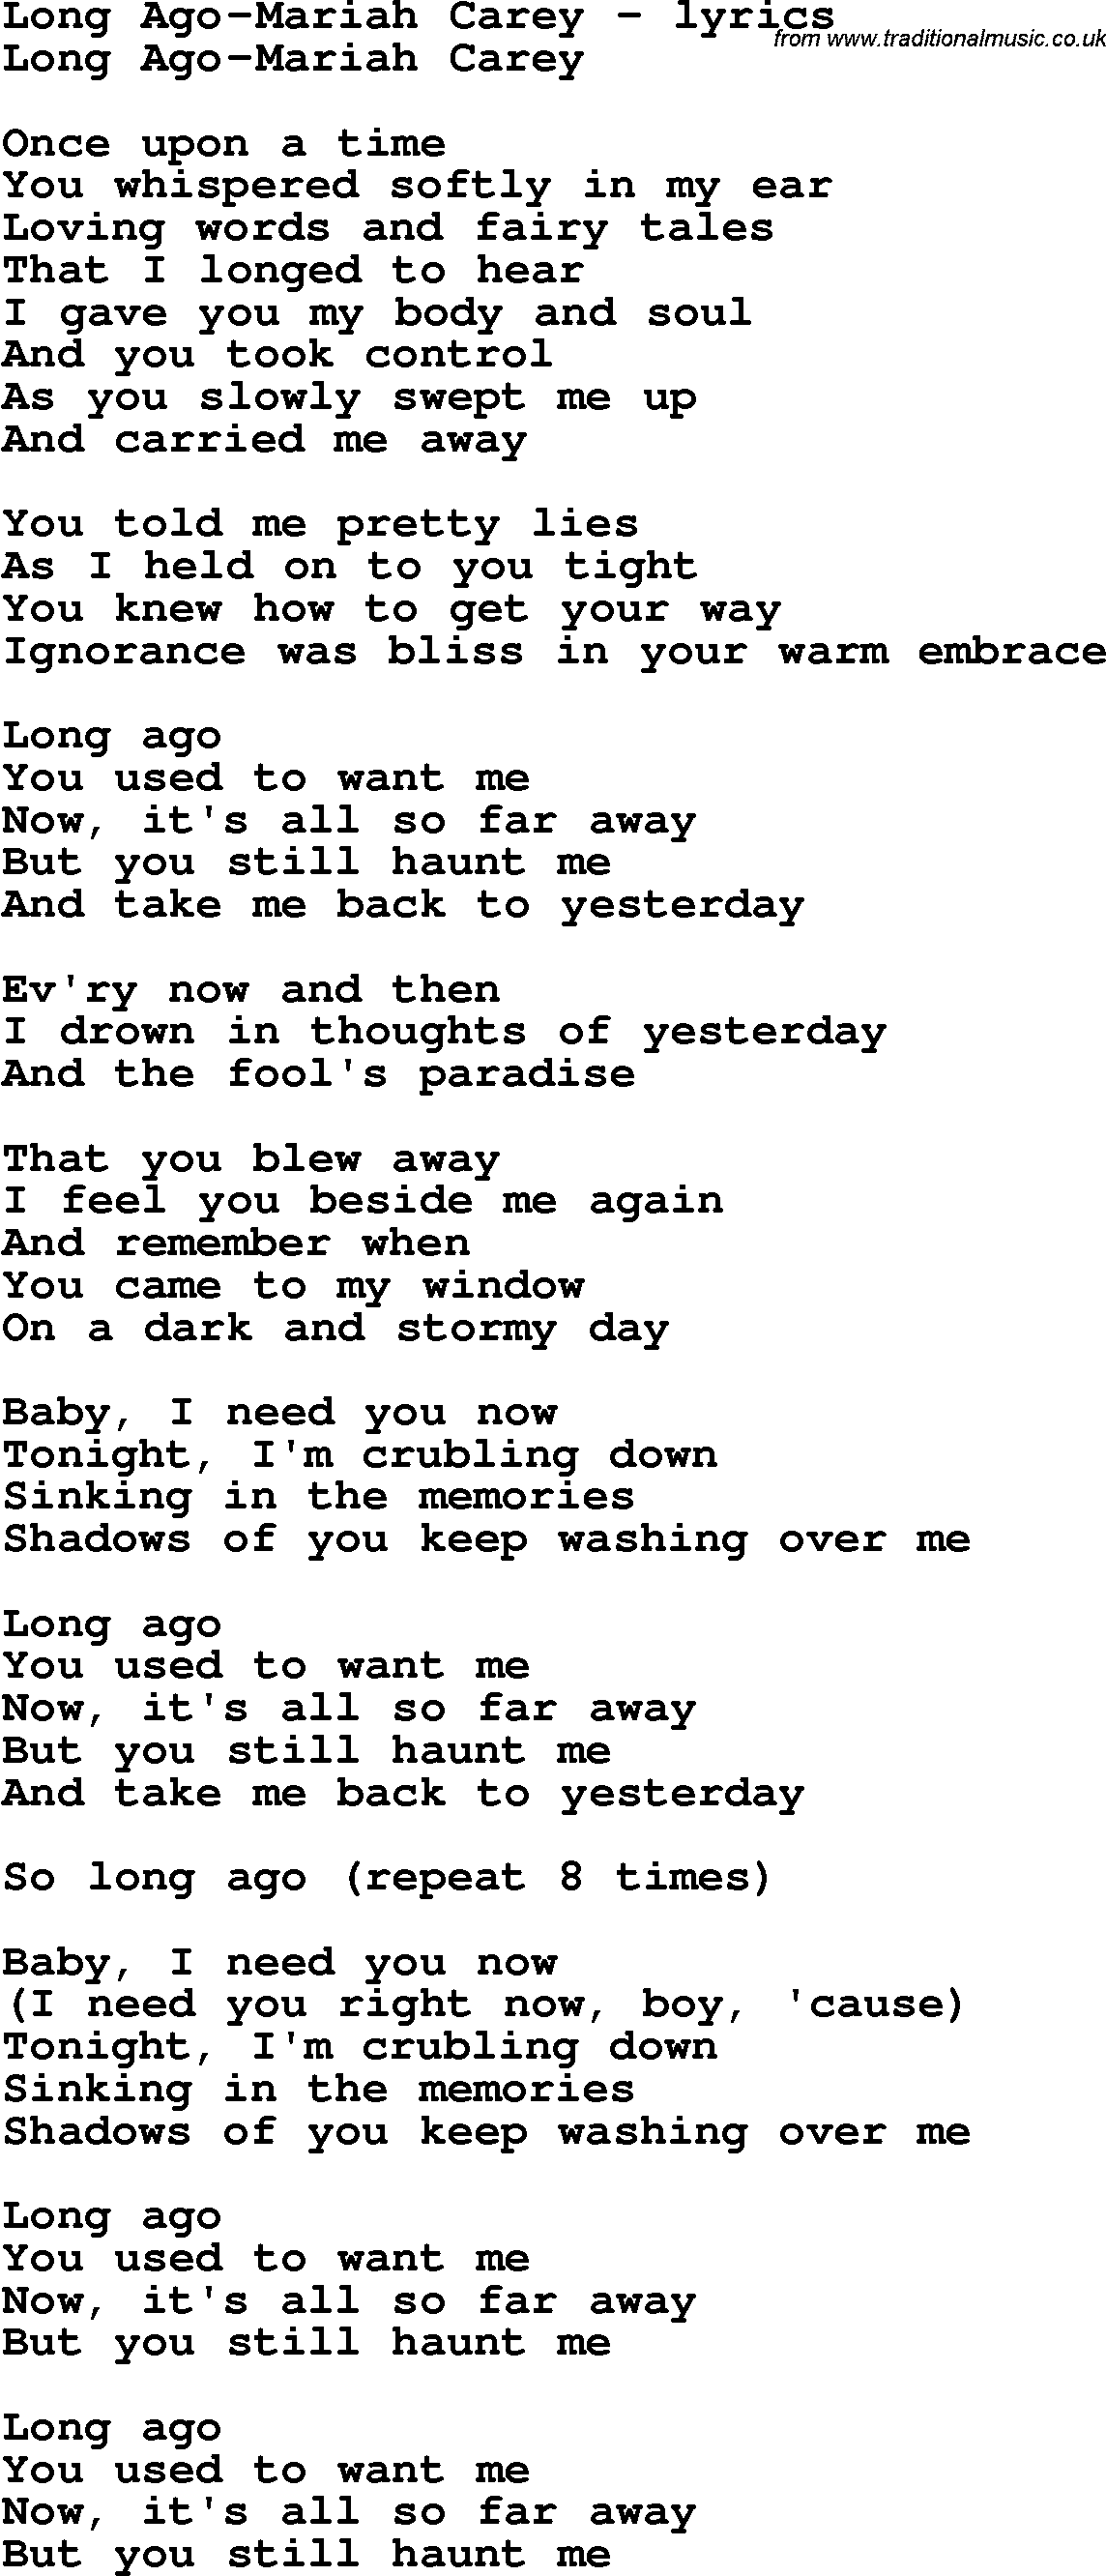 Love Song Lyrics for: Long Ago-Mariah Carey